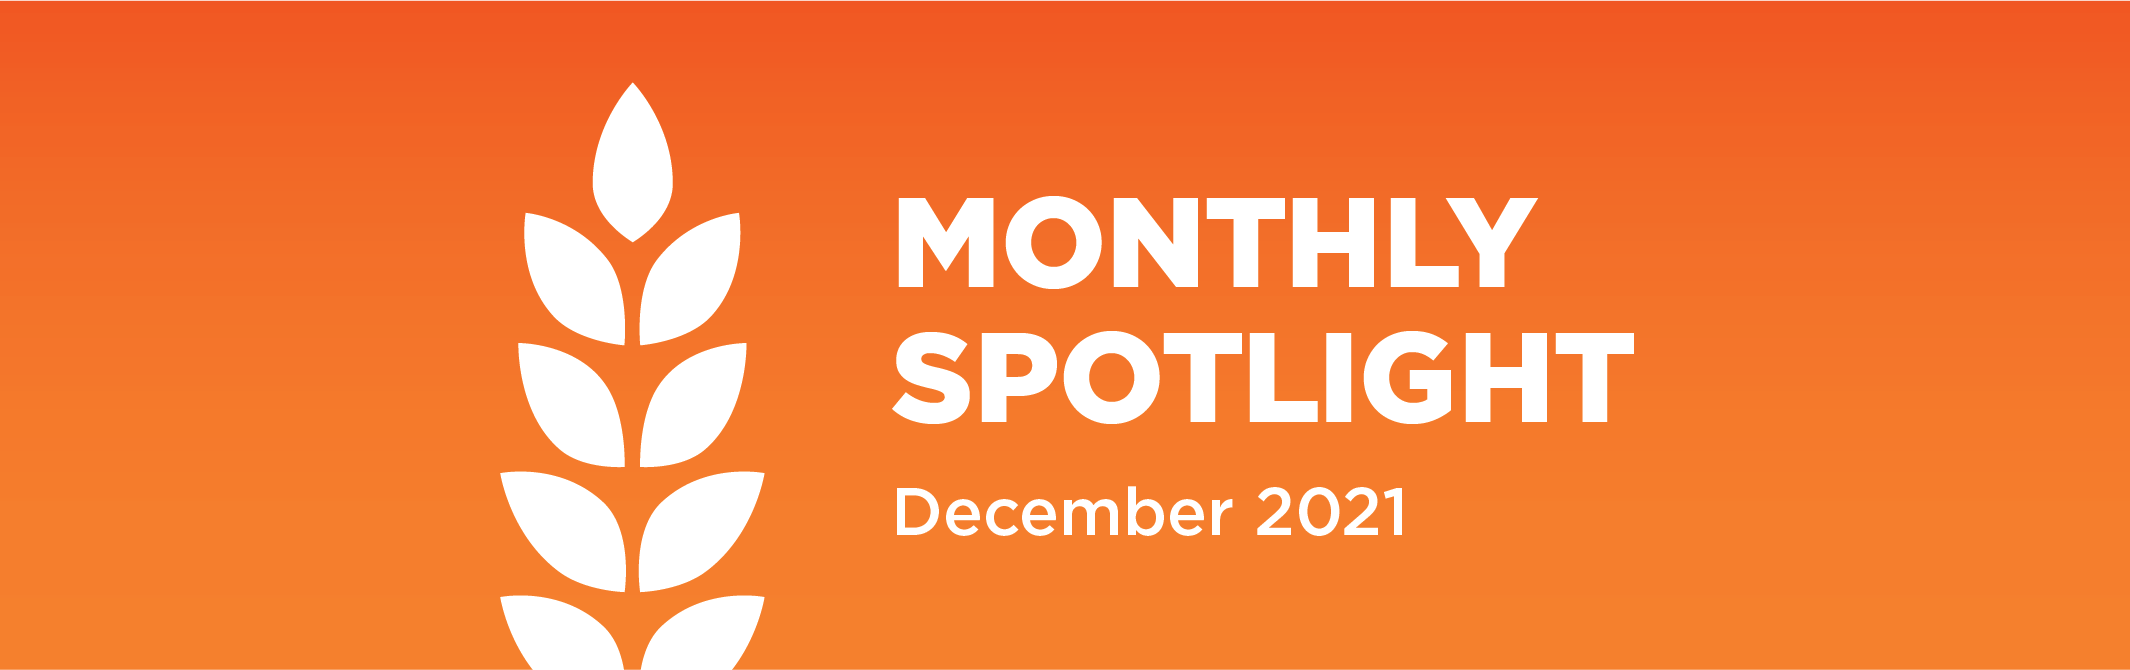 Feeding South Florida’s Monthly Spotlight: December